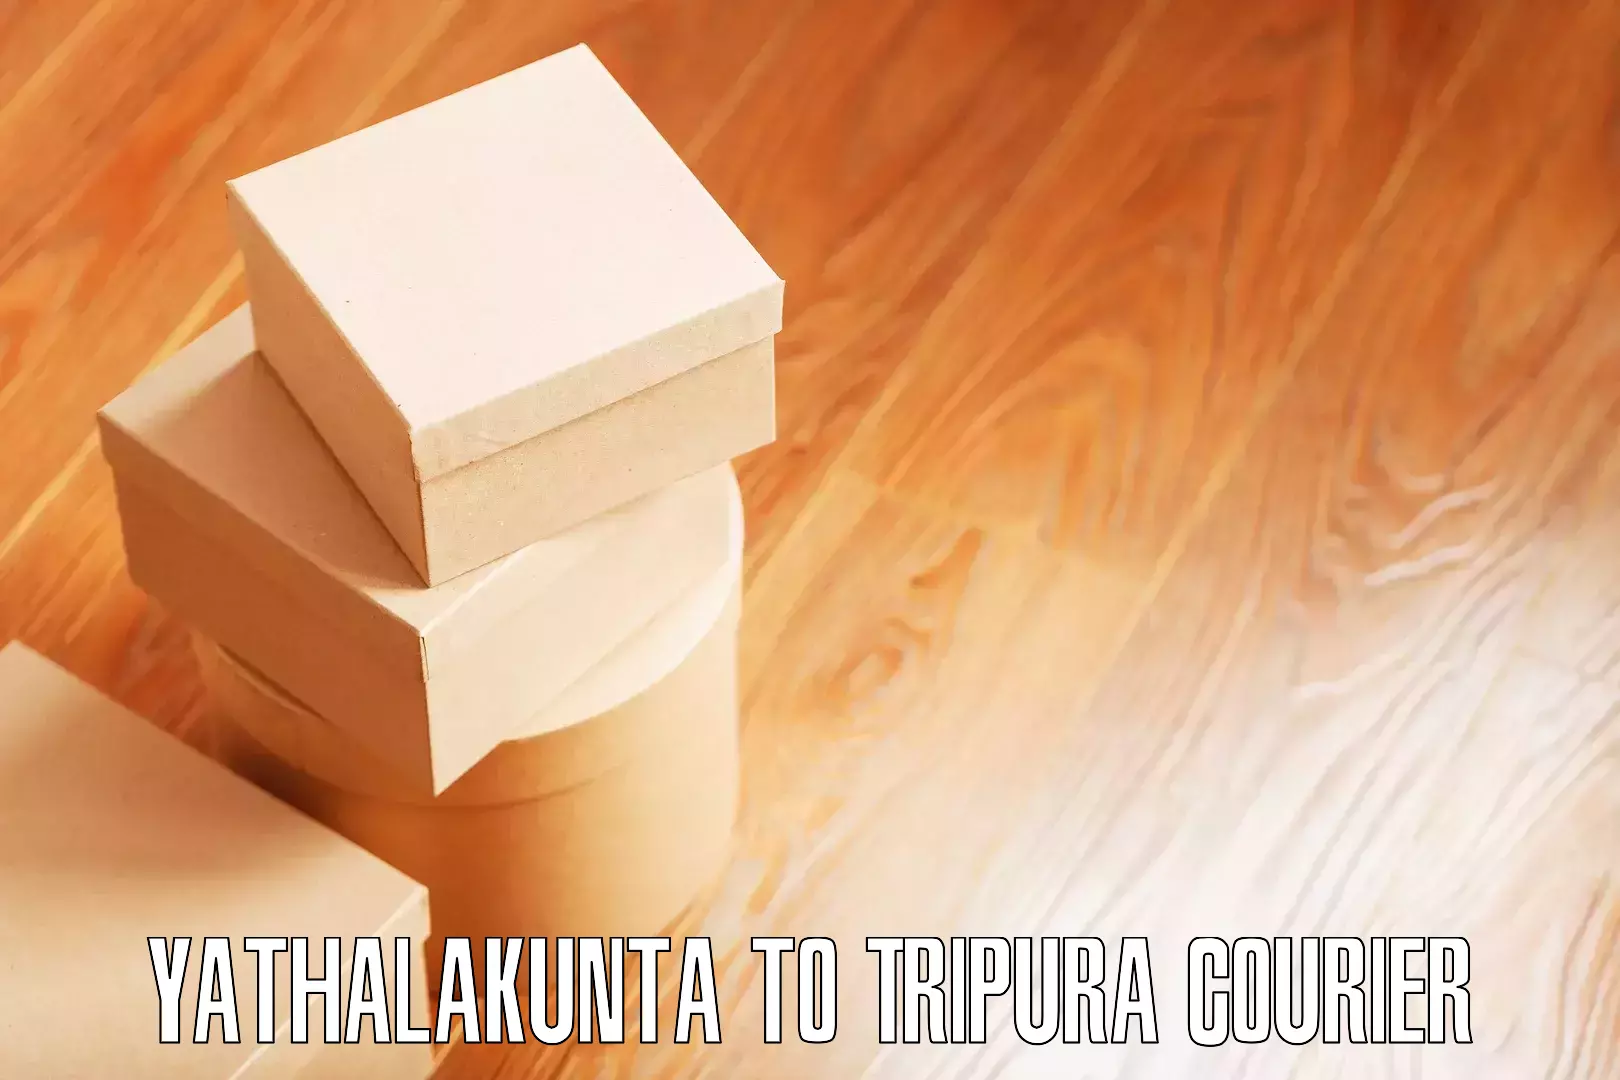 Efficient packing and moving Yathalakunta to Tripura